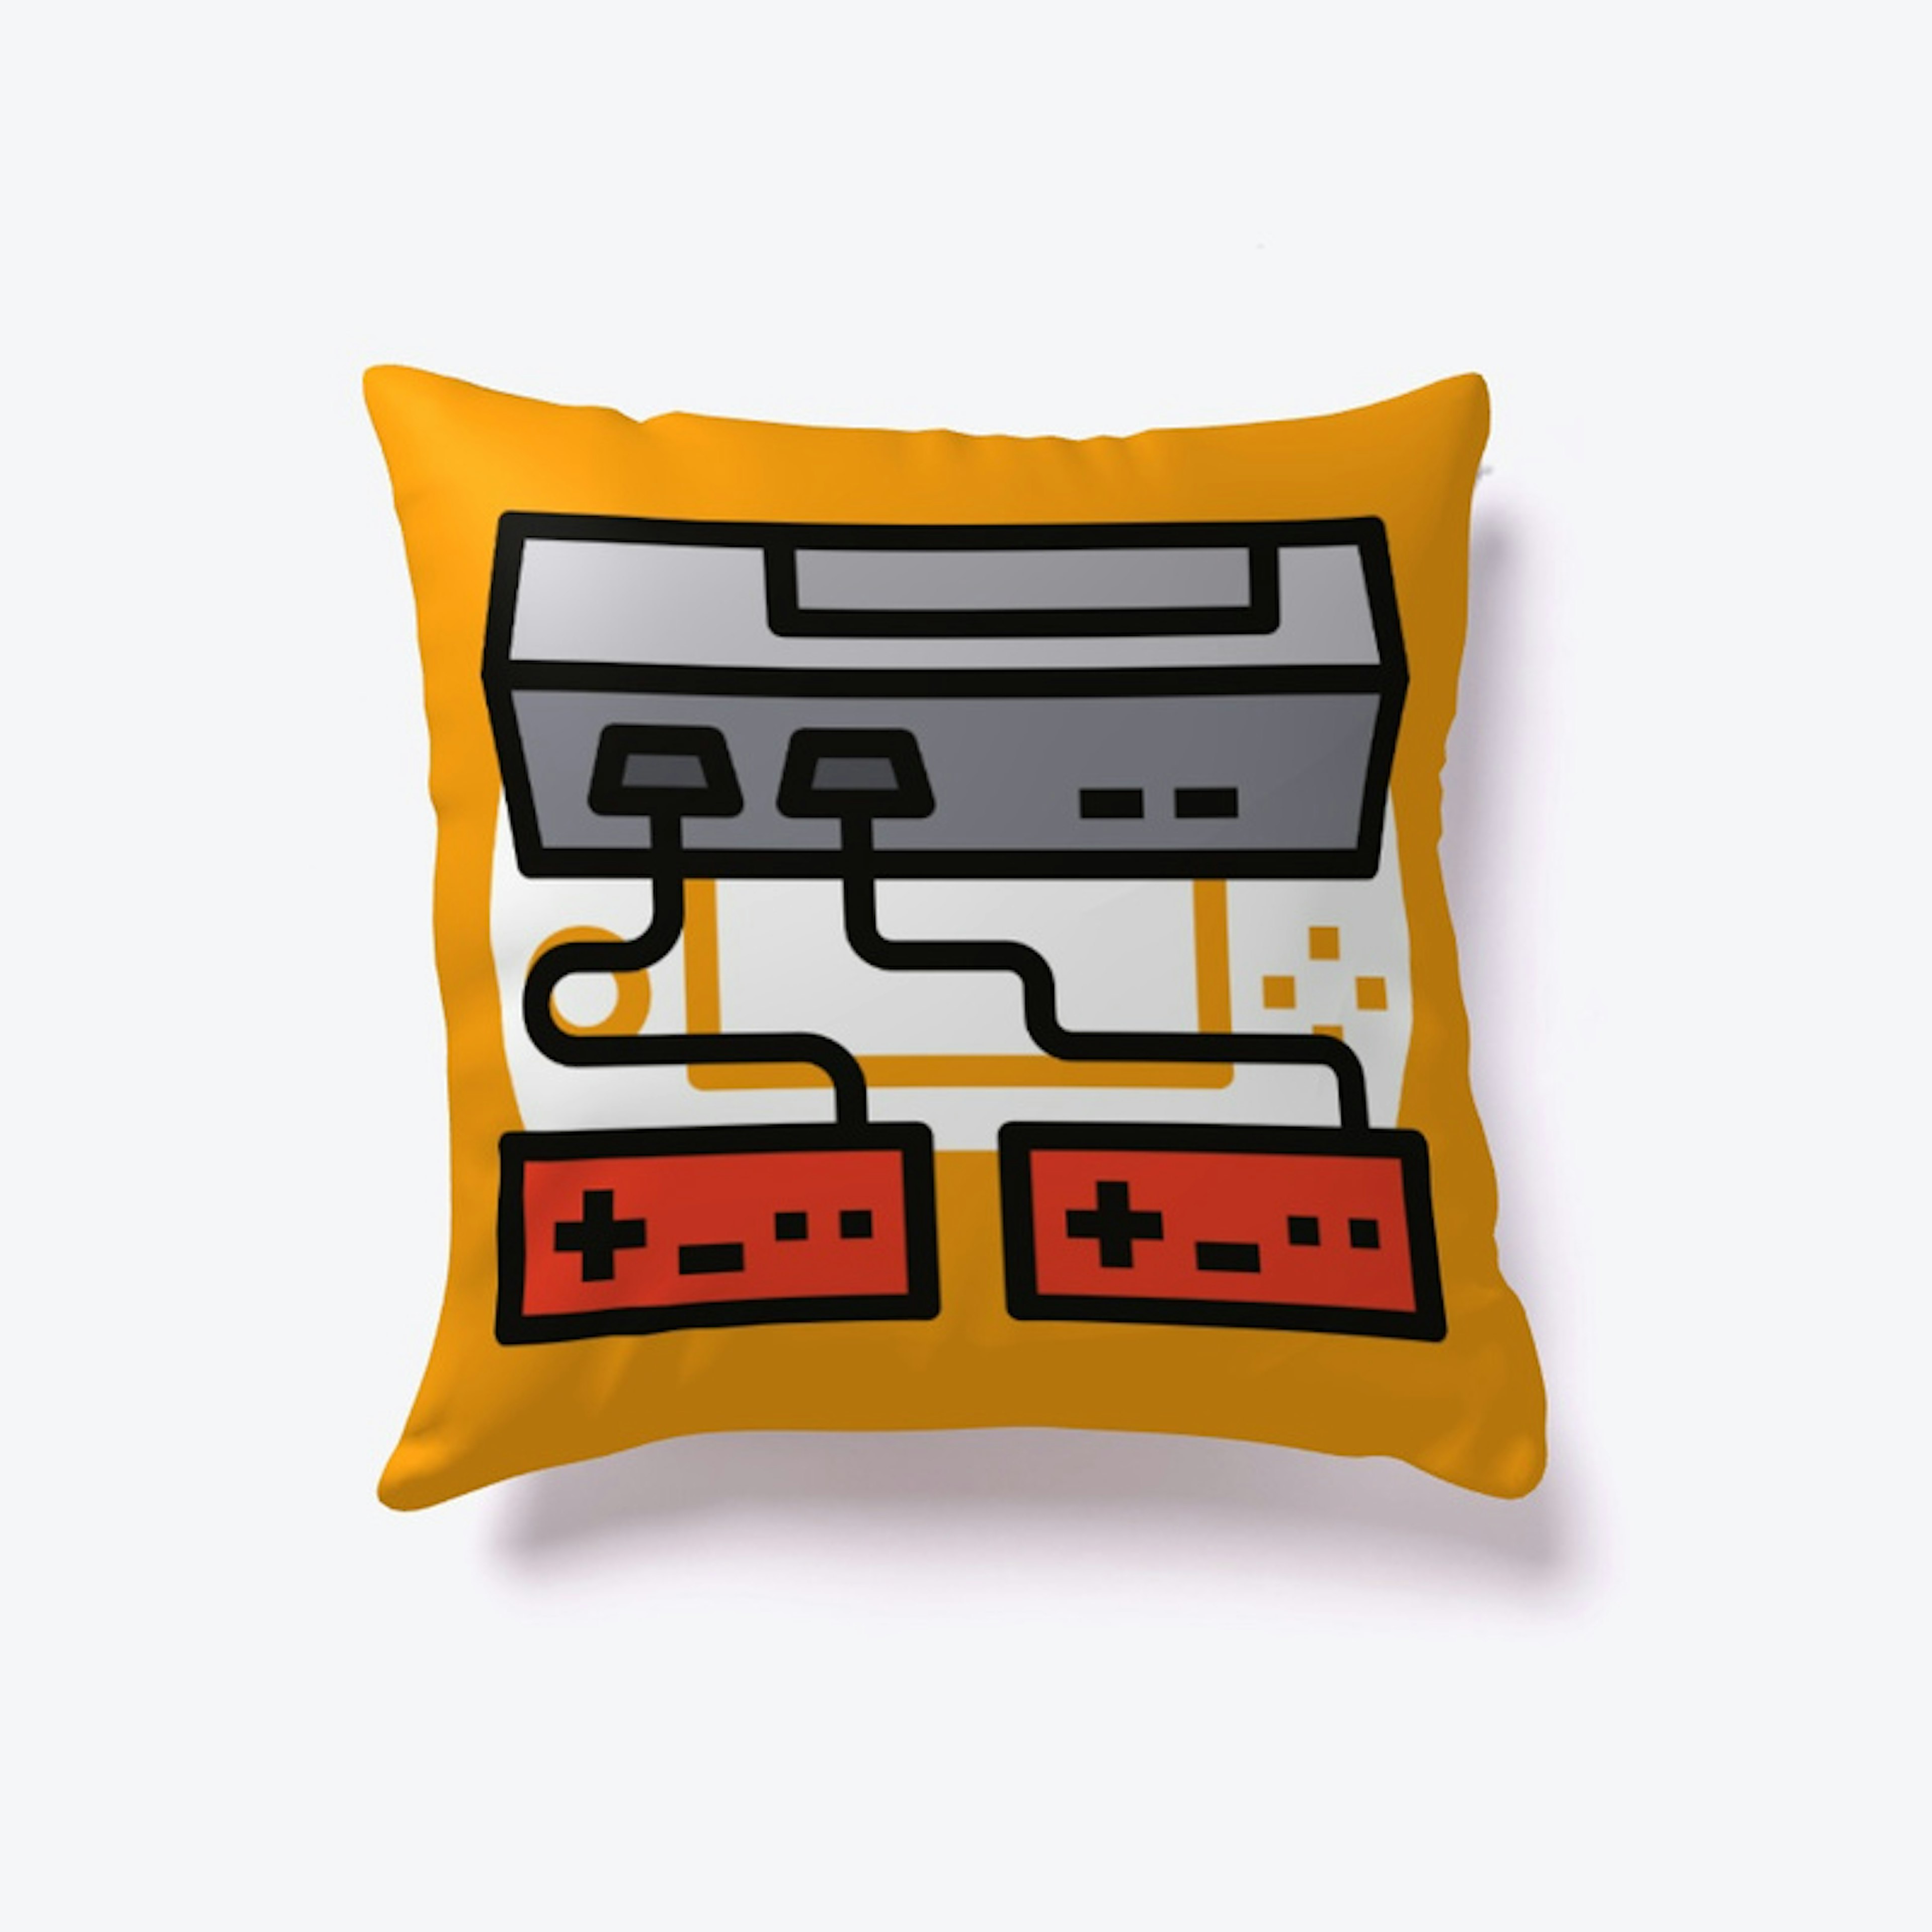 Retro Gaming Pillow - The "N.E.S."